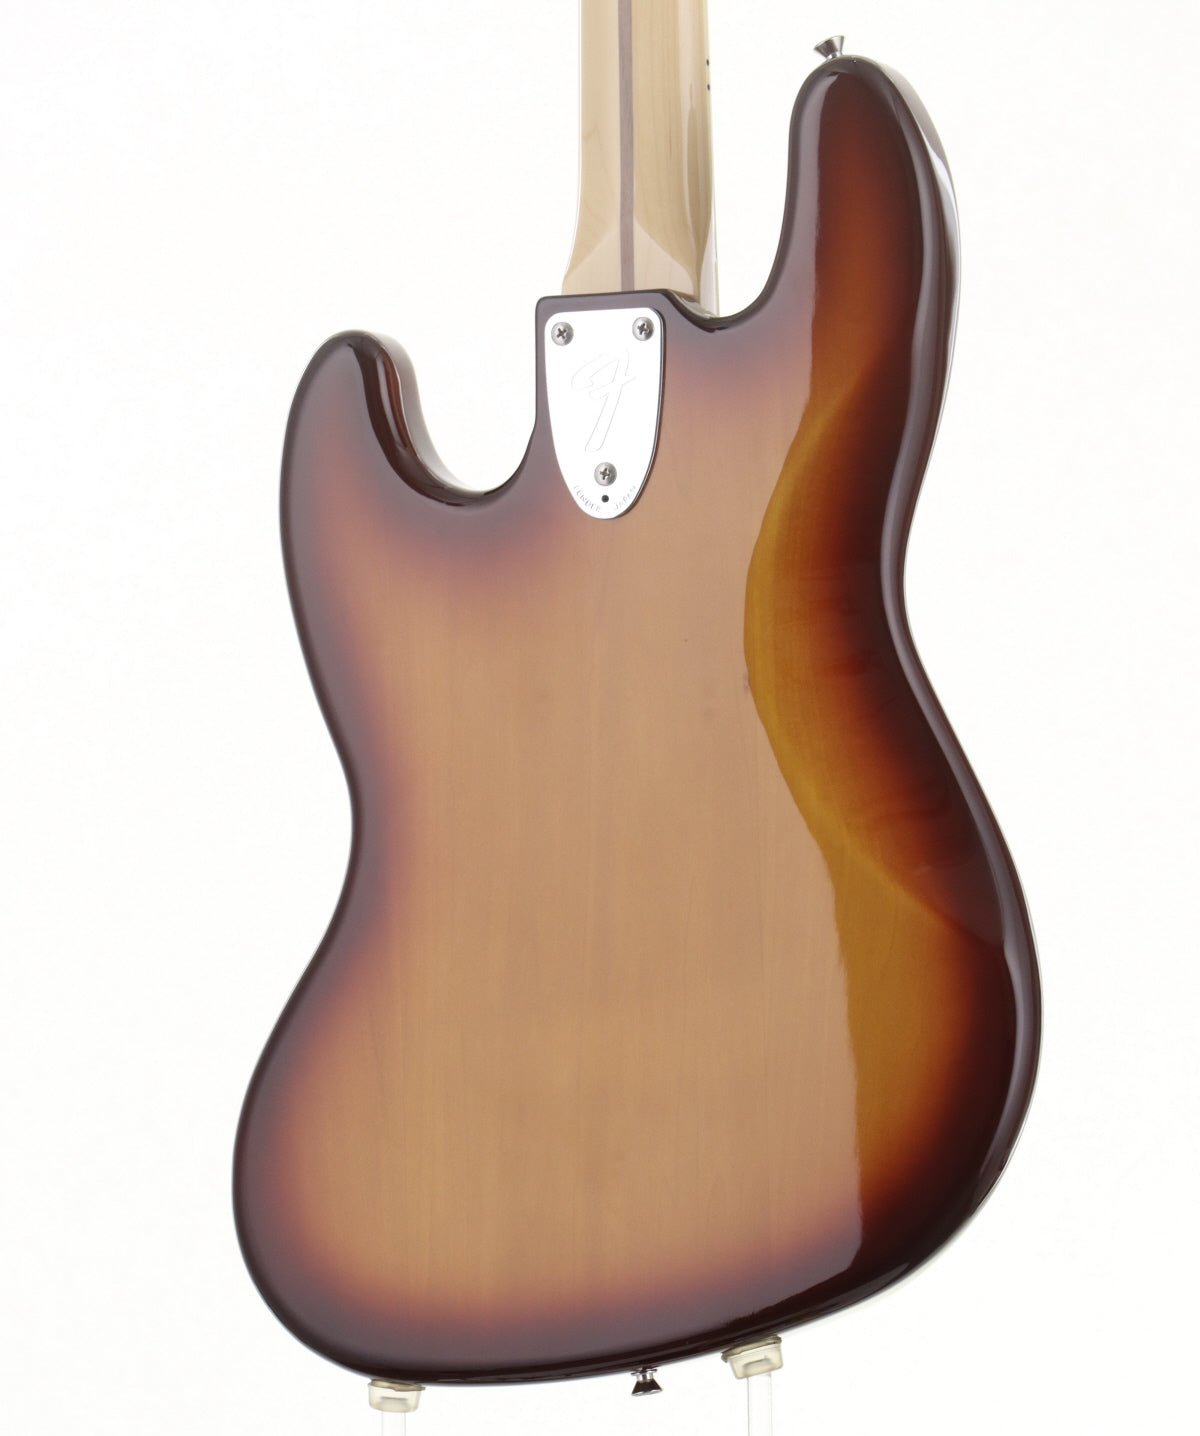 [SN JD22011400] USED Fender / M.I.J. International Color Jazz Bass Sienna Burst [06]